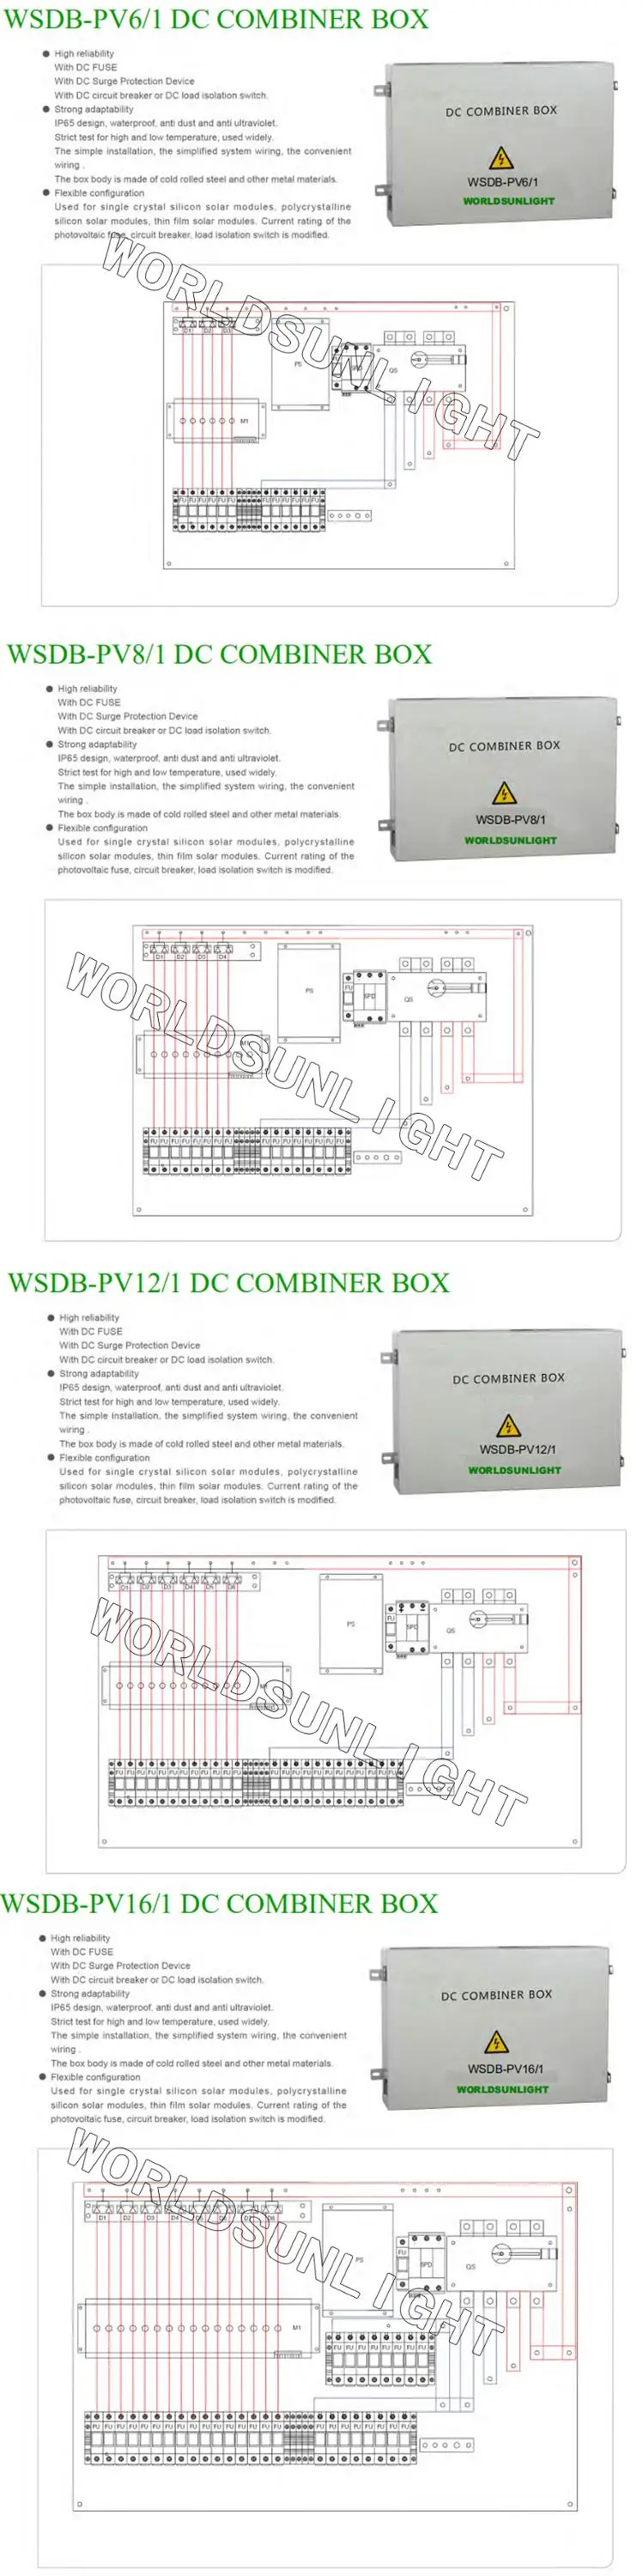 solar pv combiner box2.jpg